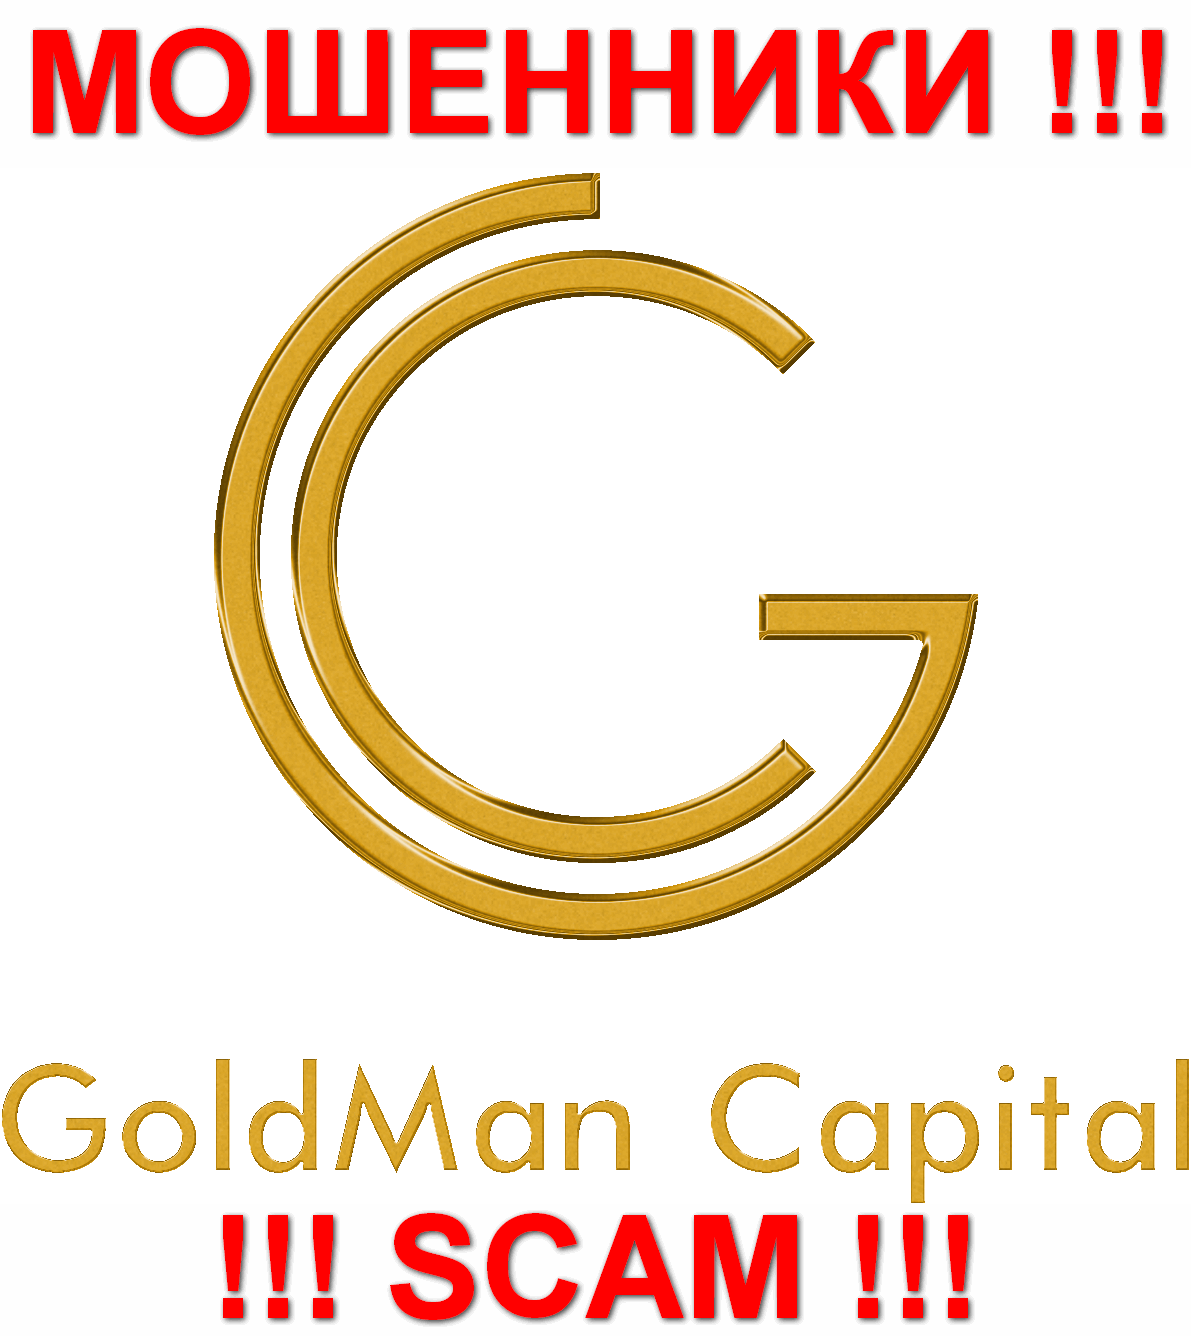 Goldman Capital - АФЕРИСТЫ !!! SCAM !!!